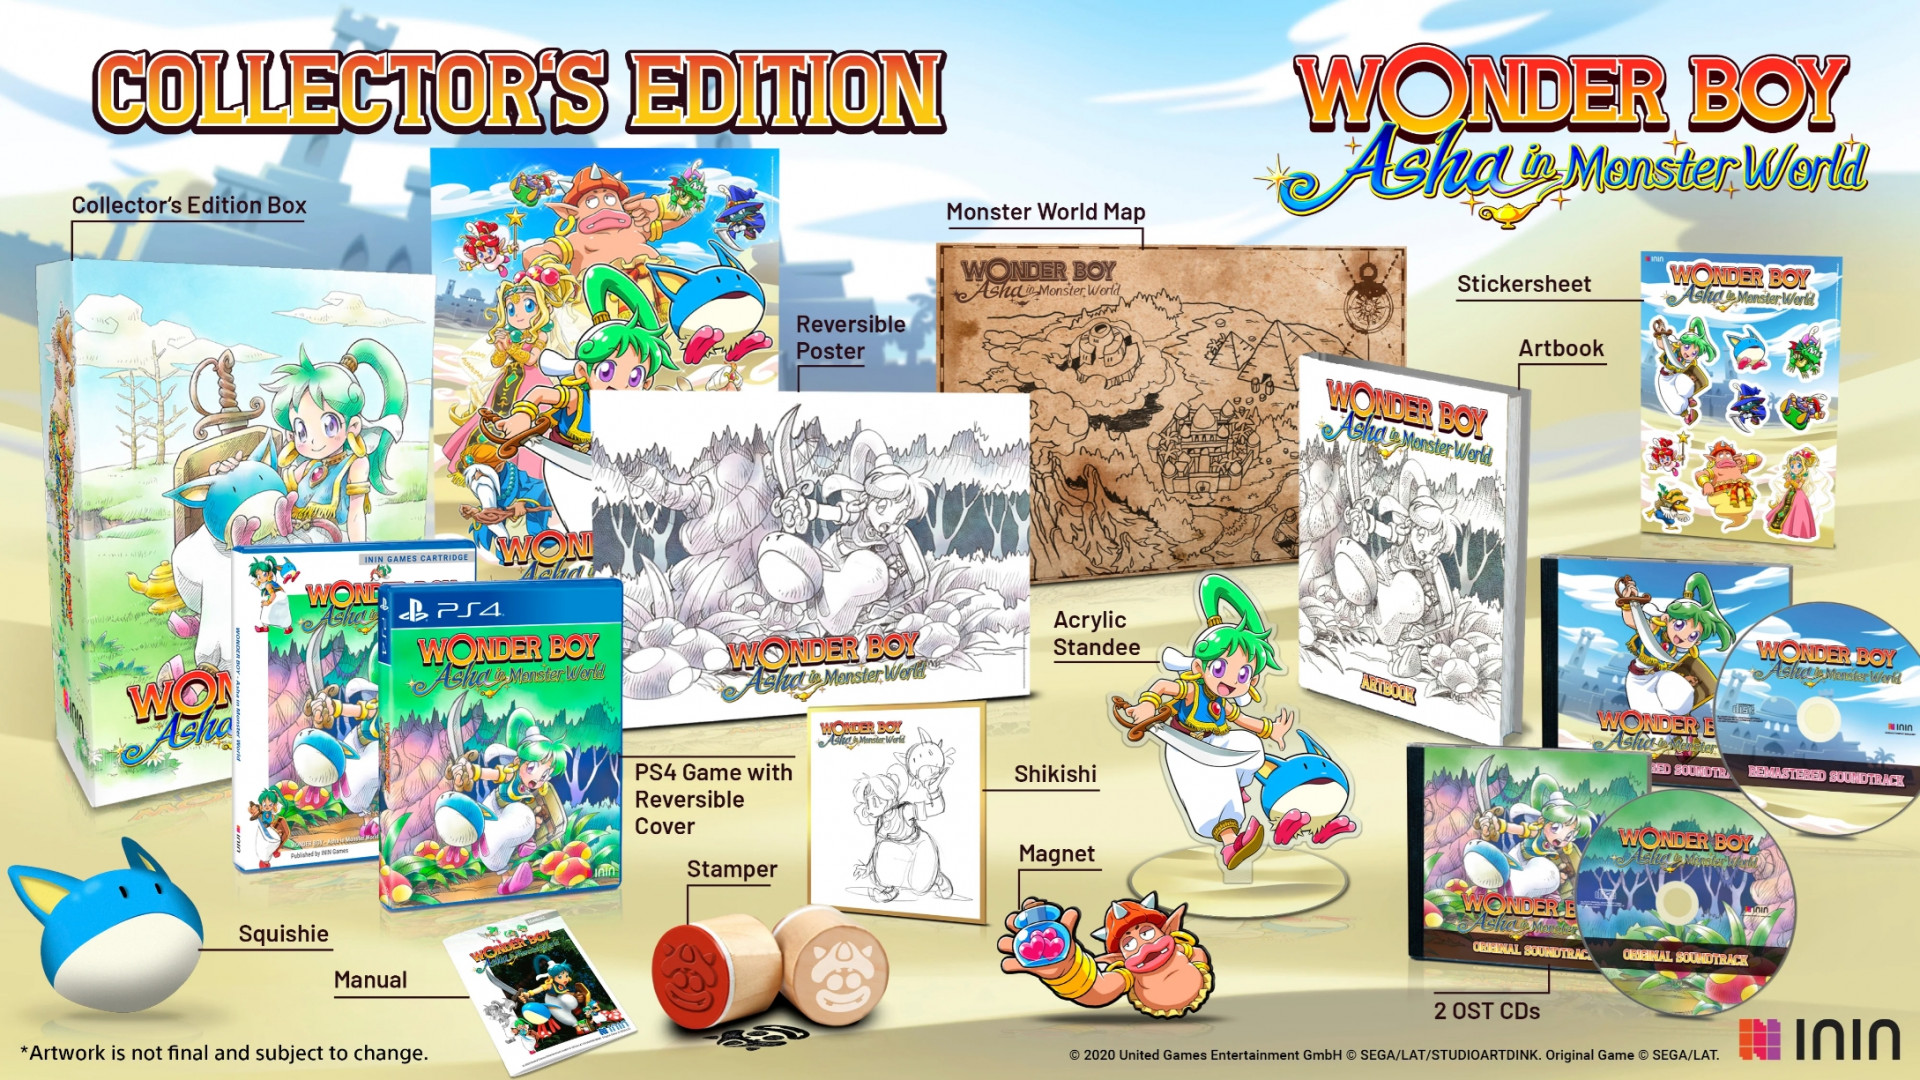 Wonder Boy Asha in Monster World Collector's Edition